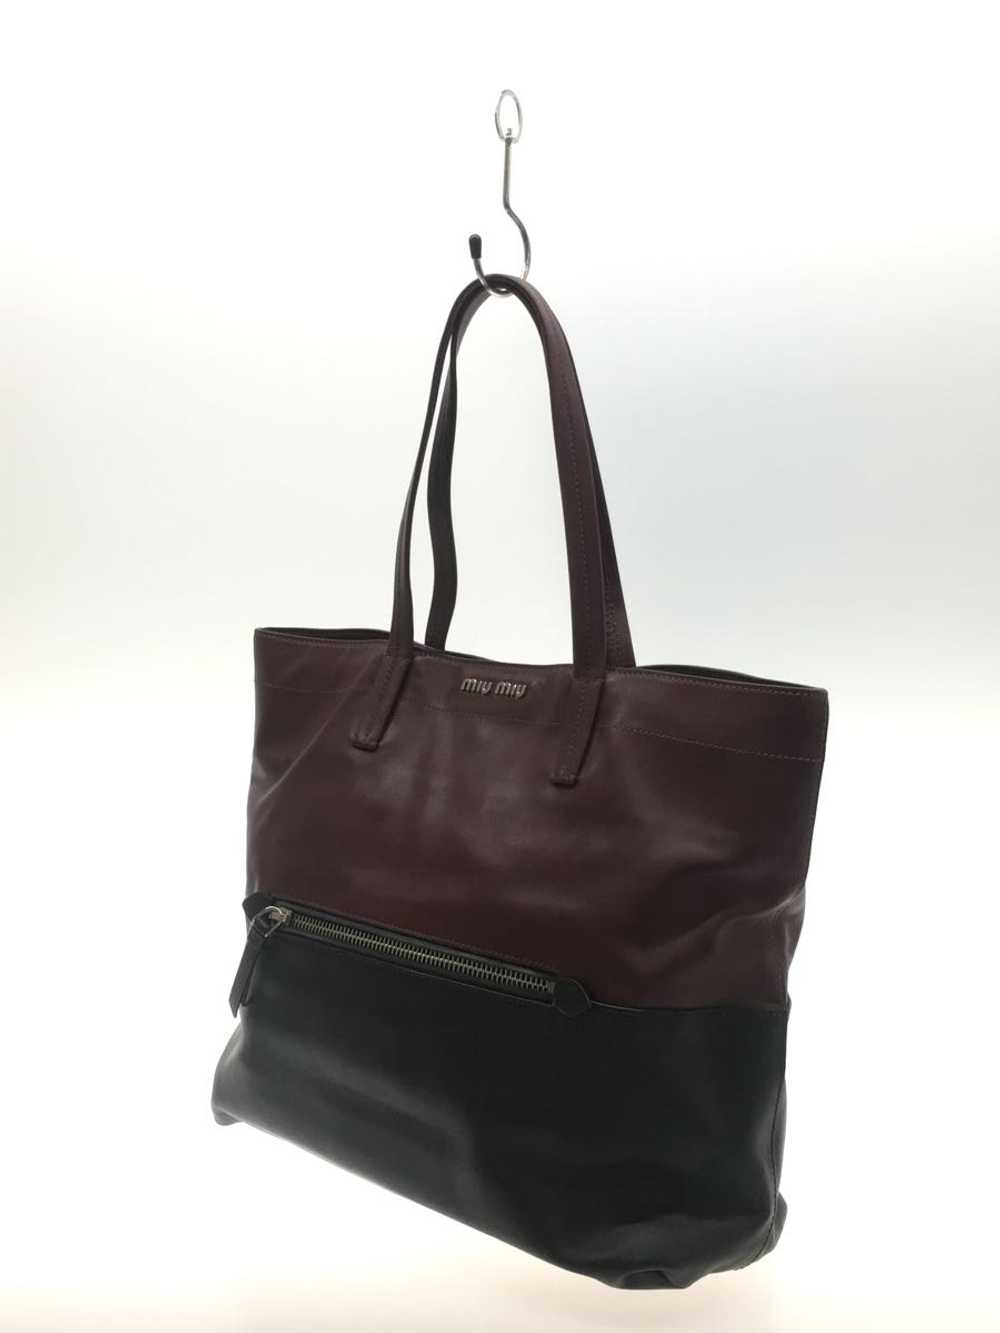 MIUMIU Tote Bag/Leather/Red Bag - image 2